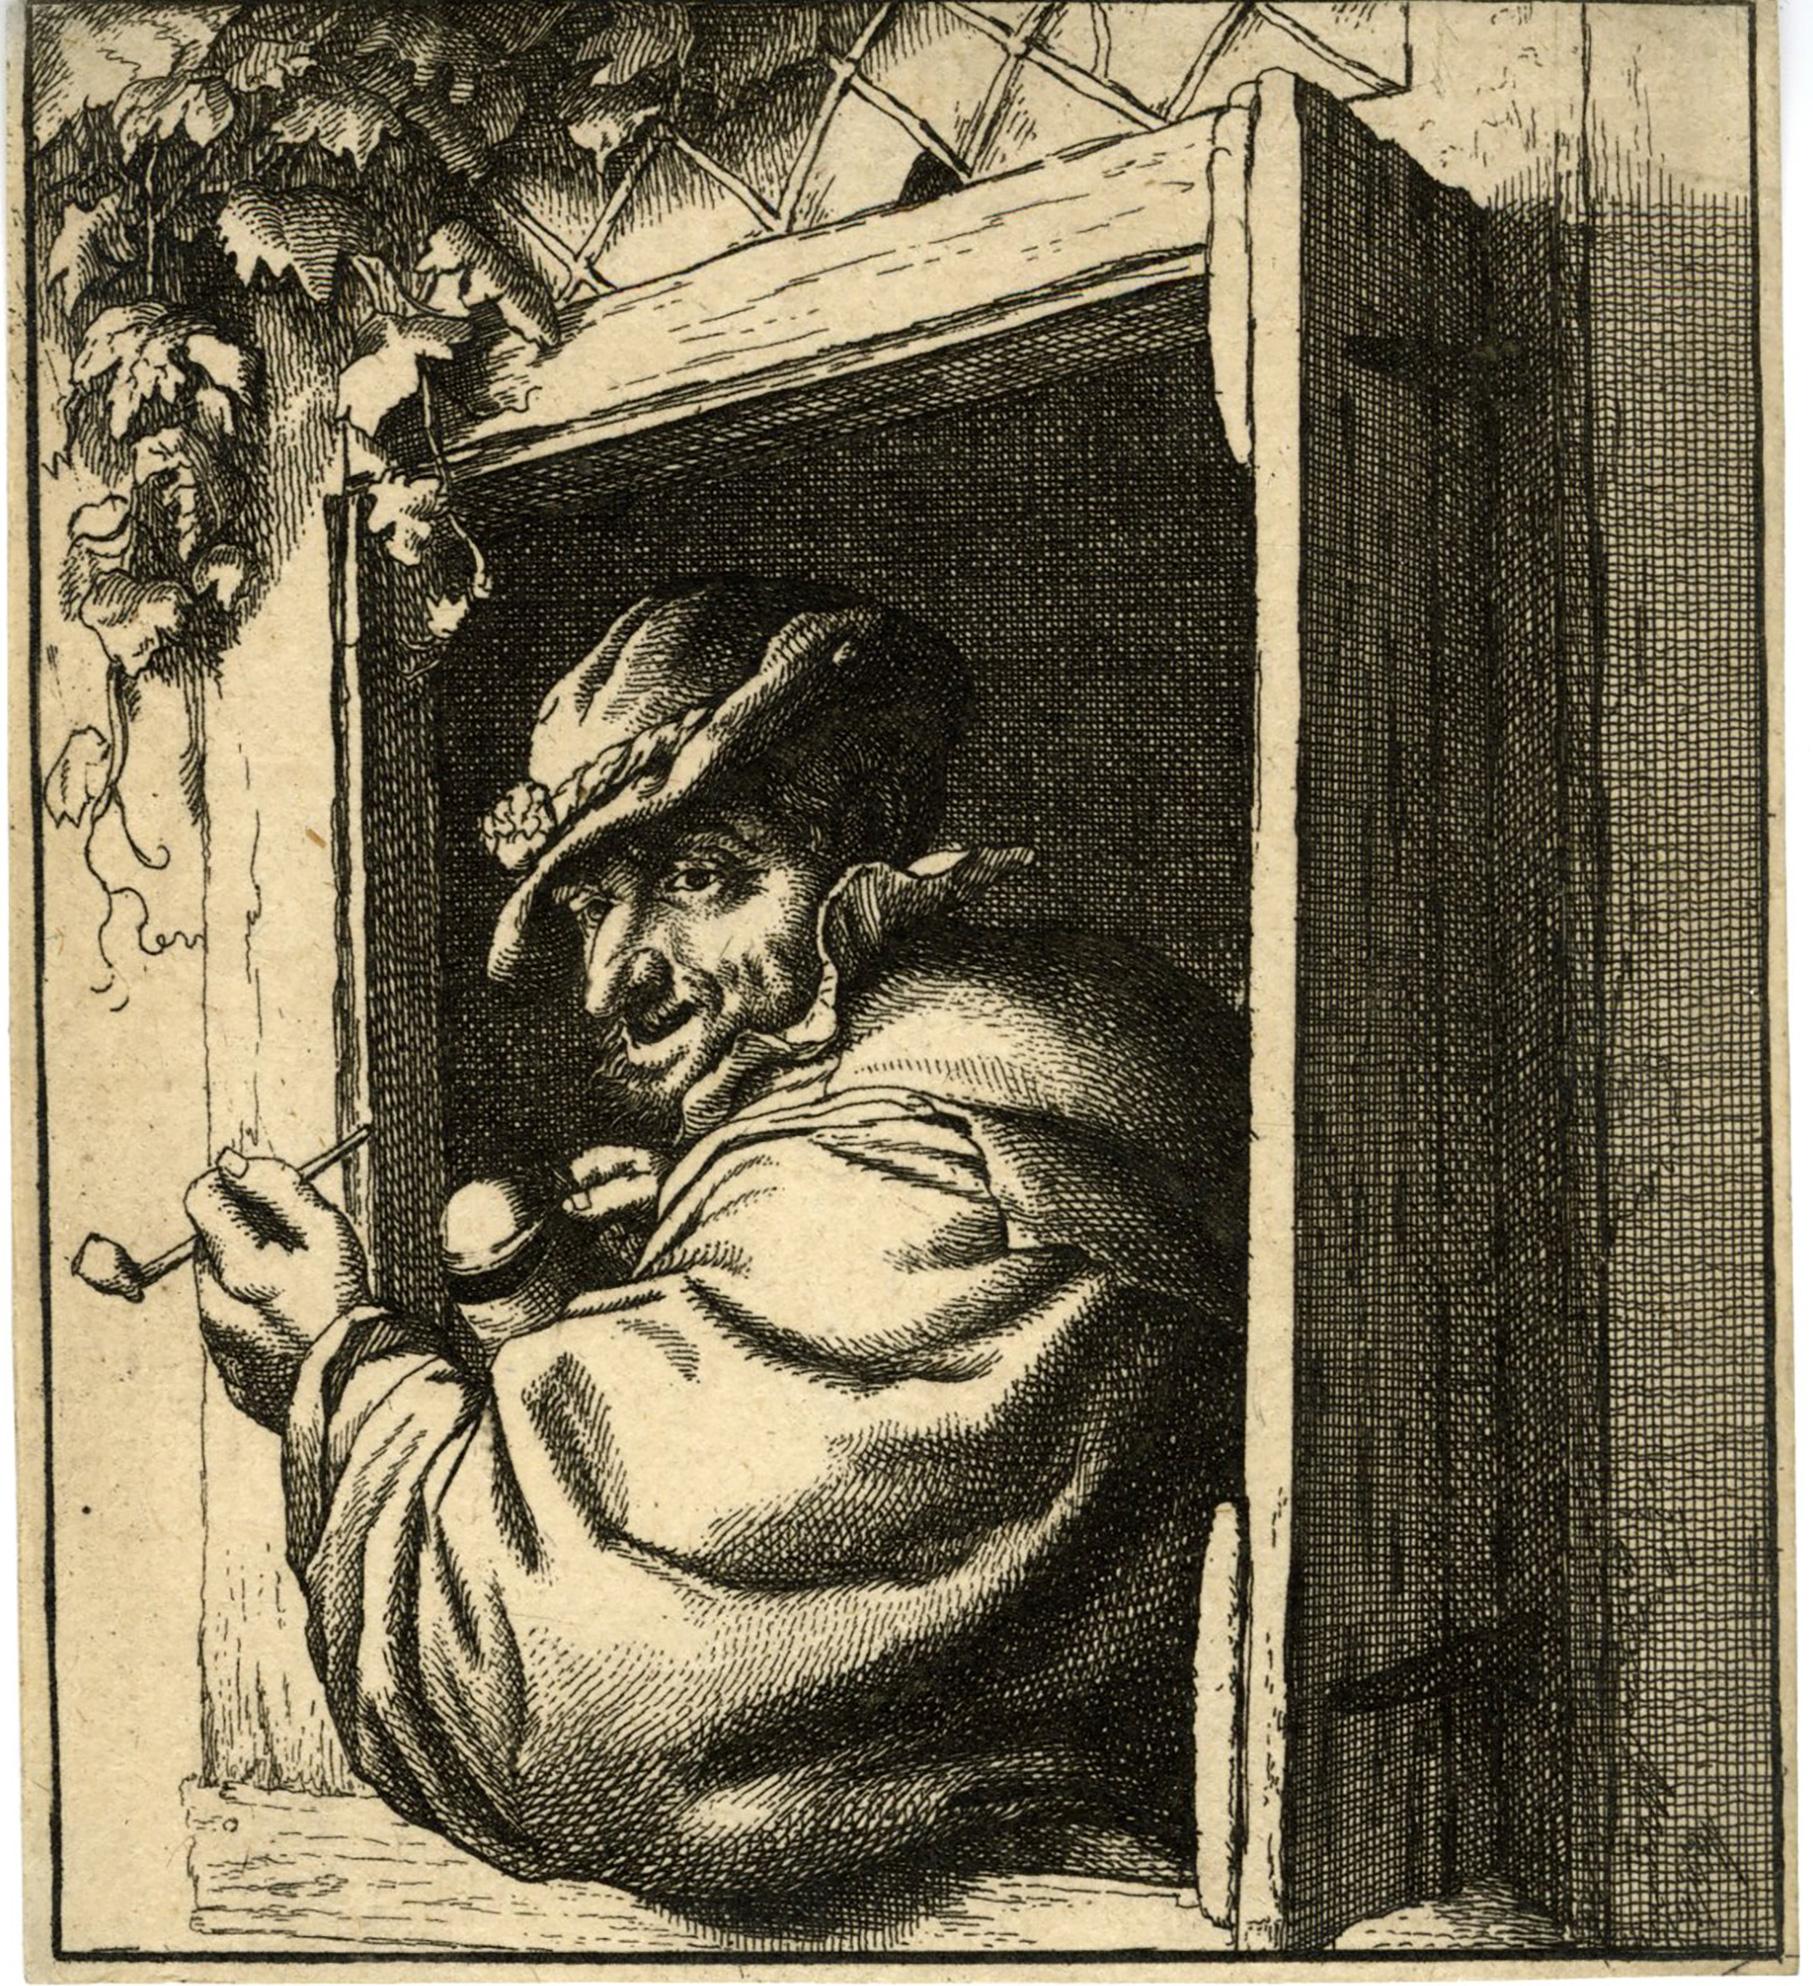 Adriaen van Ostade Portrait Print - The Smoker at the Window by David Deuchar, after Ostade